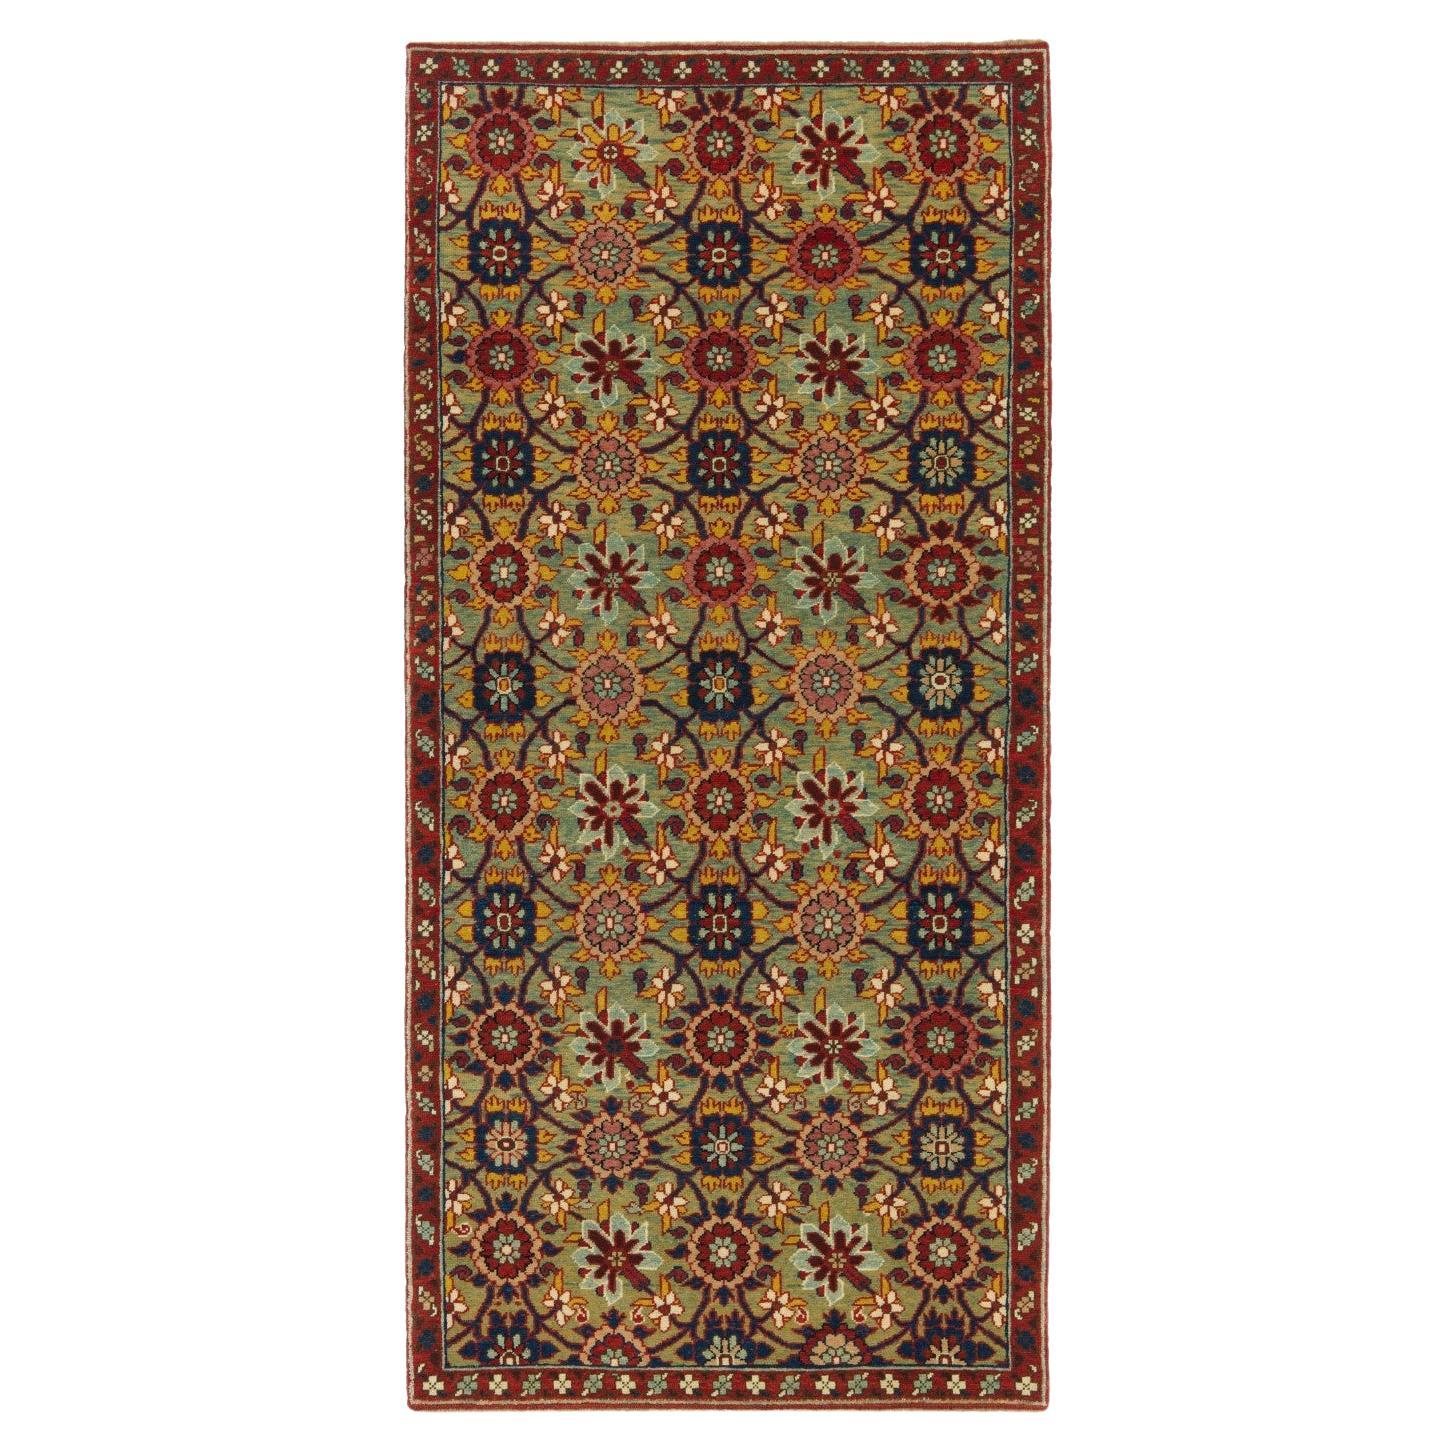 Ararat Rugs Mina Khani Rug, 19th Century Persian Revival Carpet Natural Dye